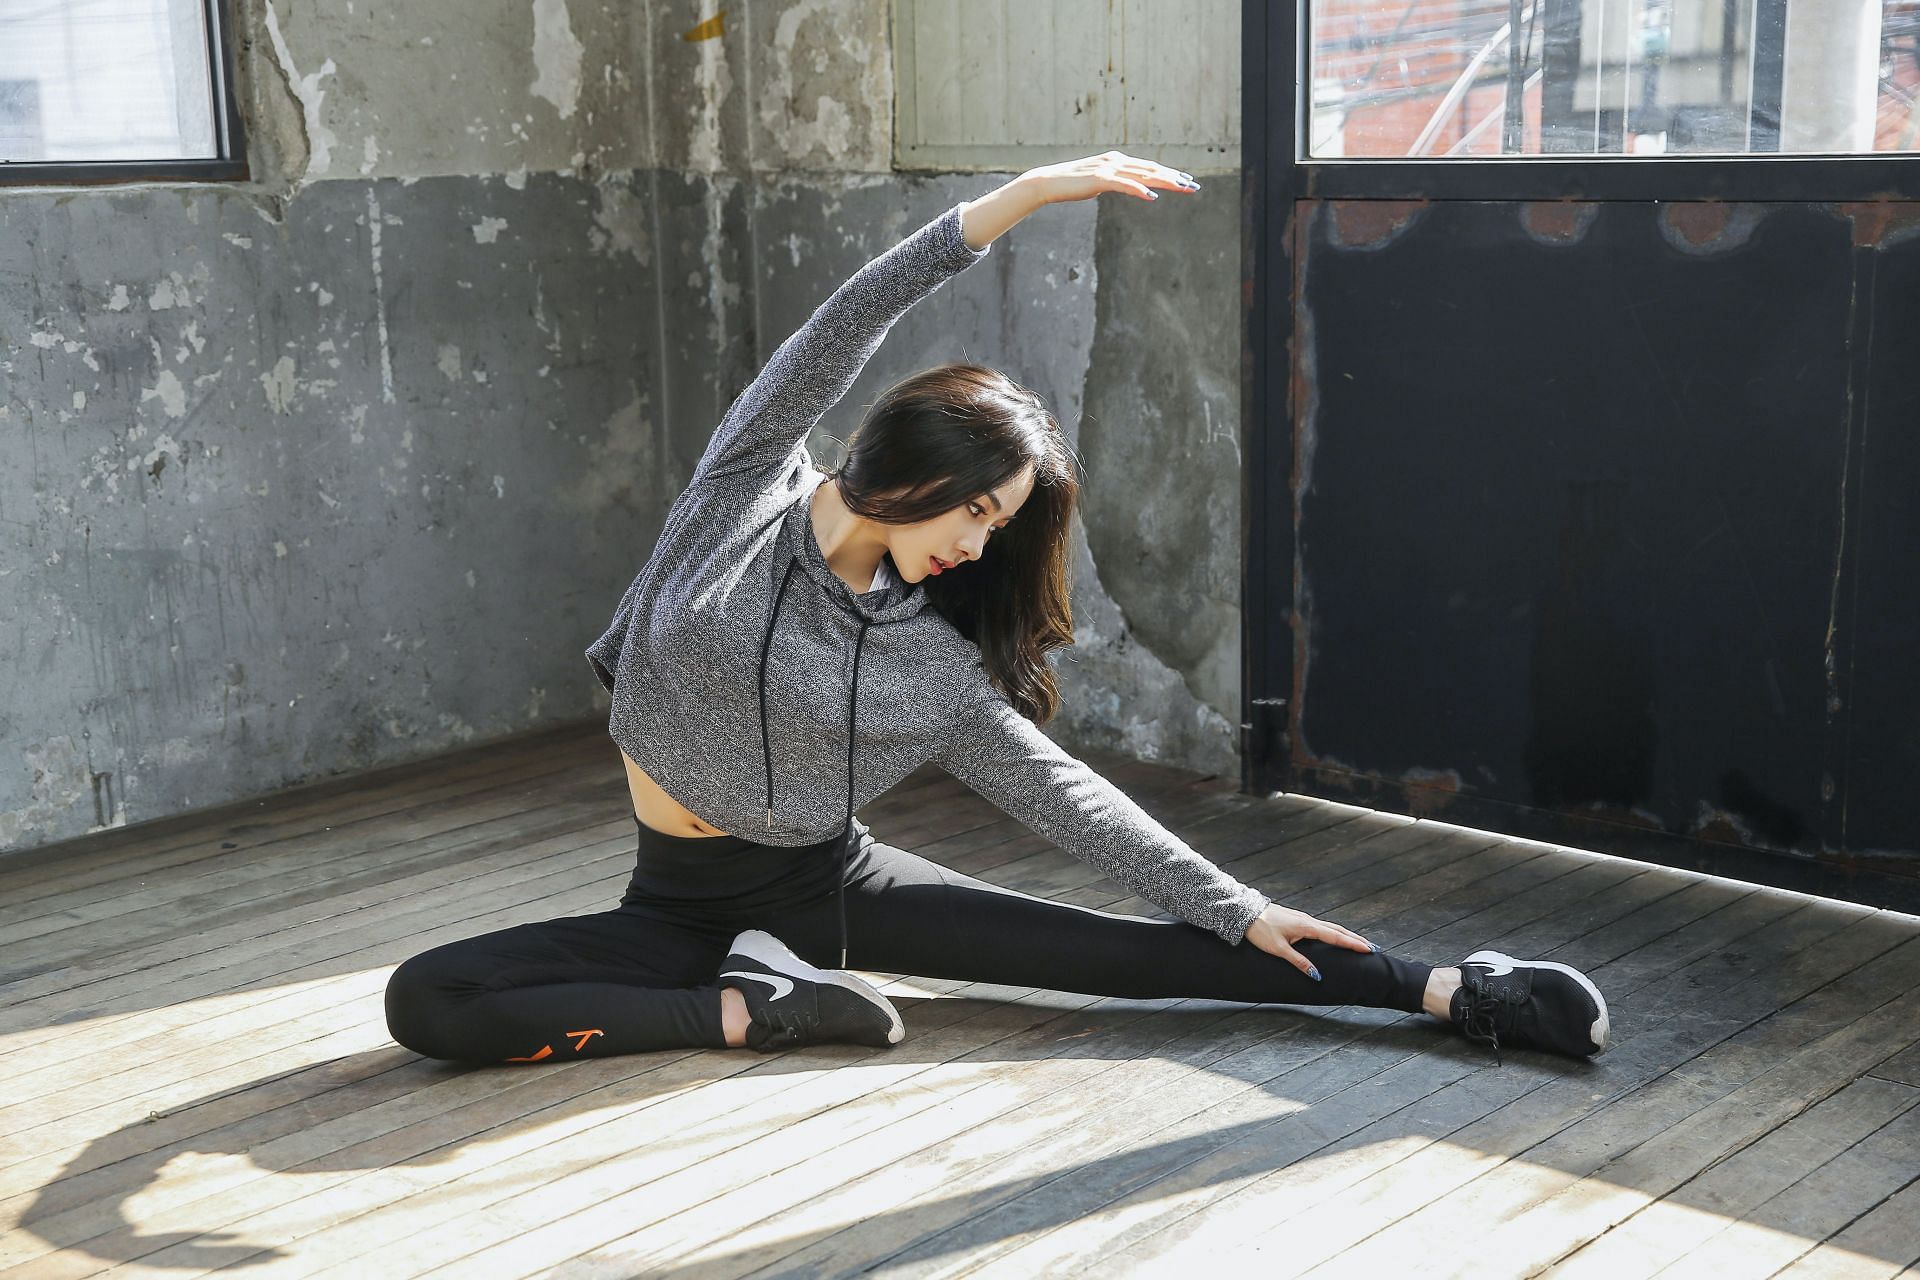 This exercise improves flexibility. (Image via Unsplash/ Alex Shaw)